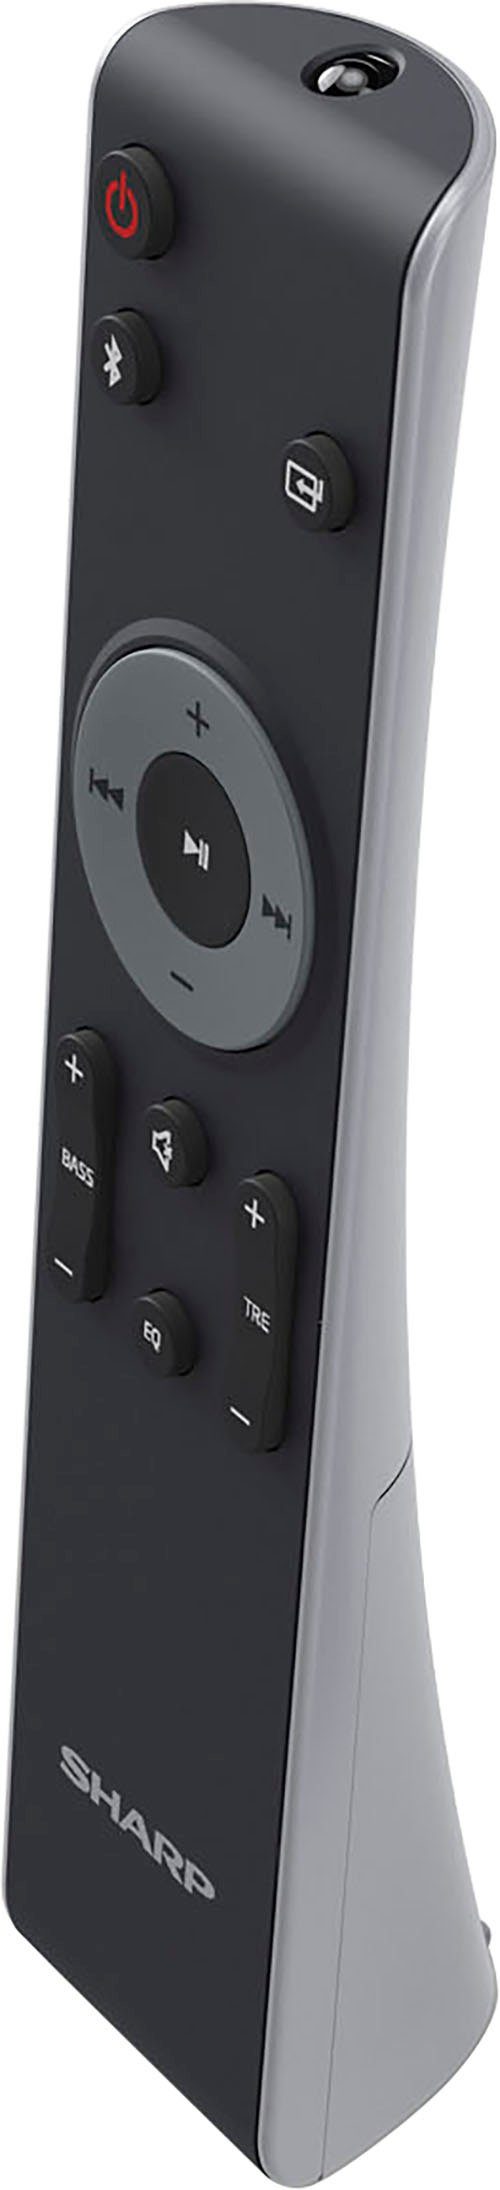 Sharp HT-SBW182 Soundbar W) 160 2.1 (Bluetooth